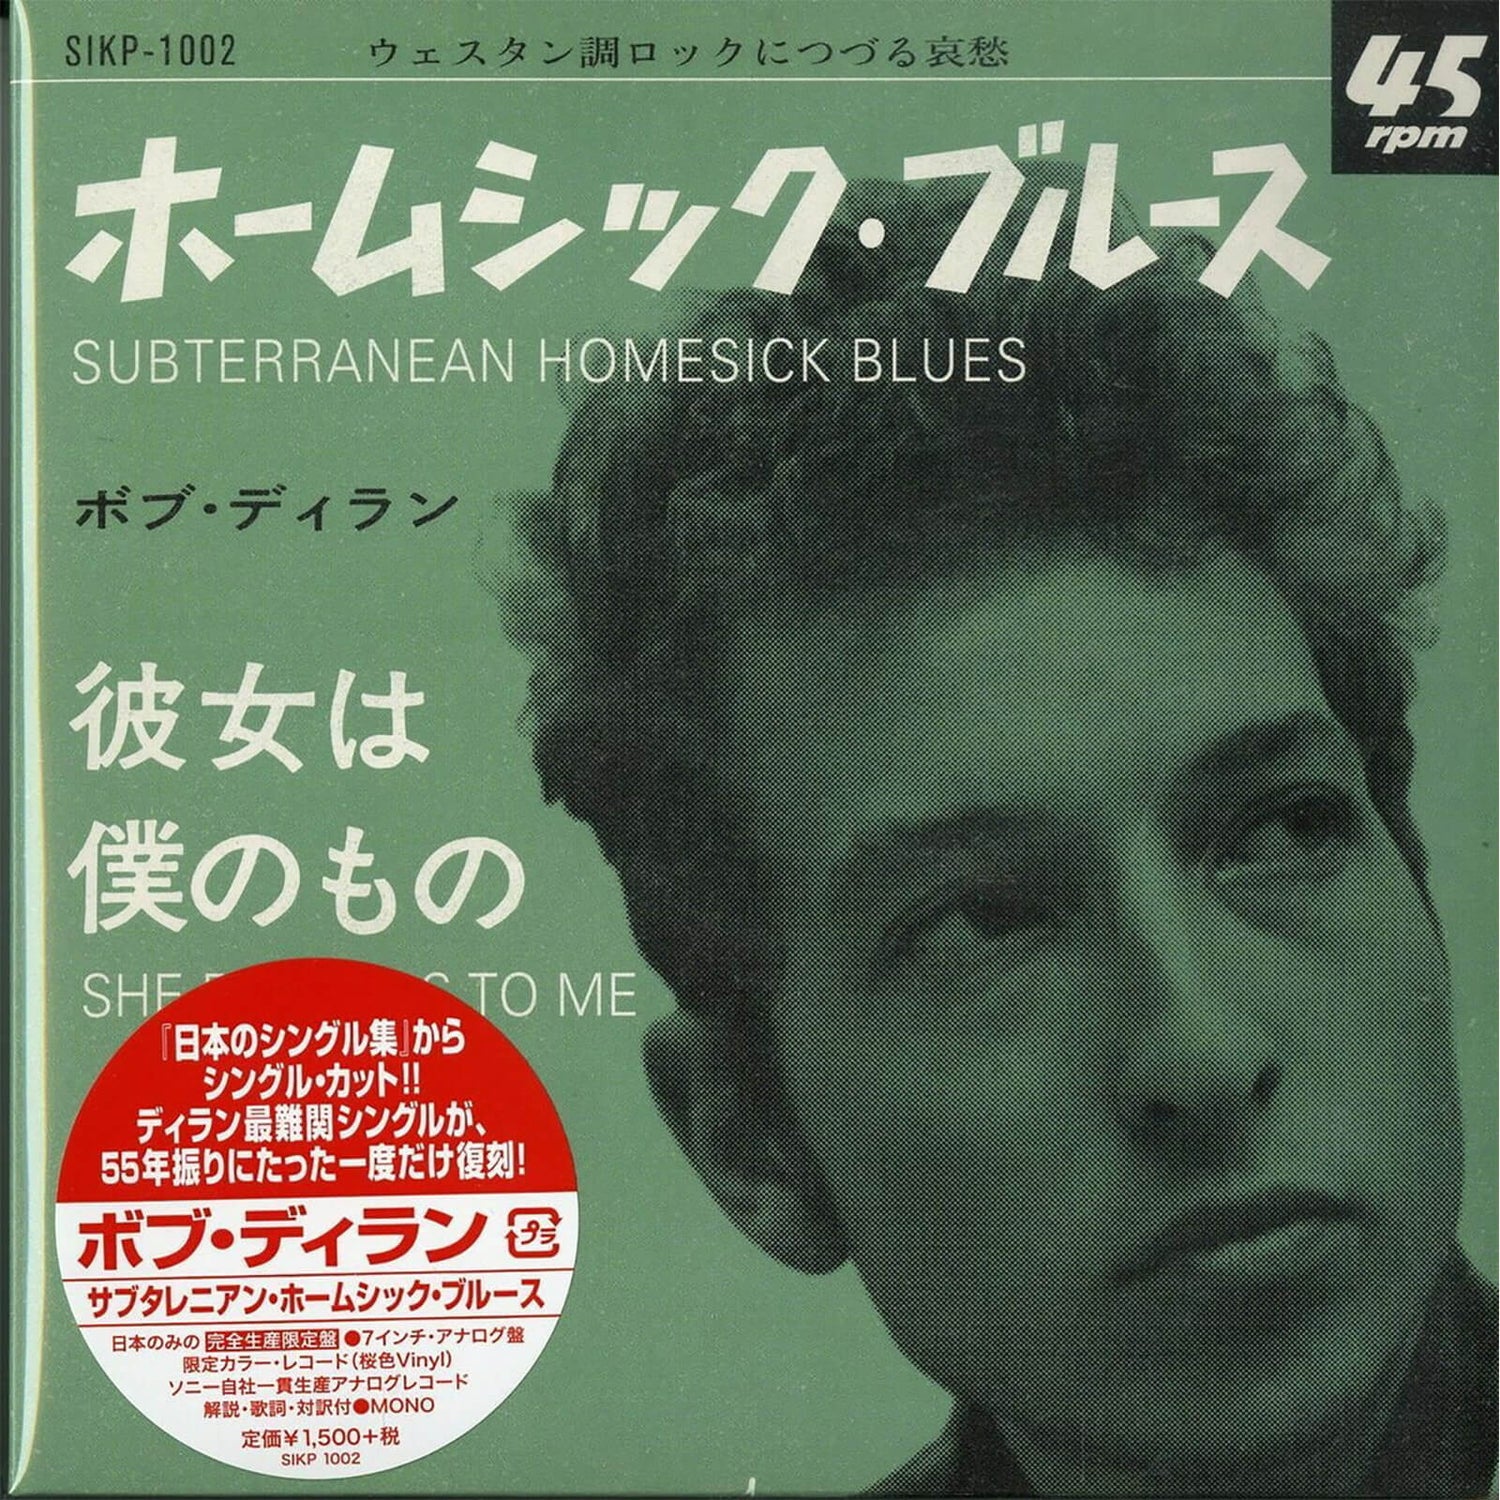 Bob Dylan - Subterranean Homesick Blues / She Belongs To Me 7" Japanese Edition